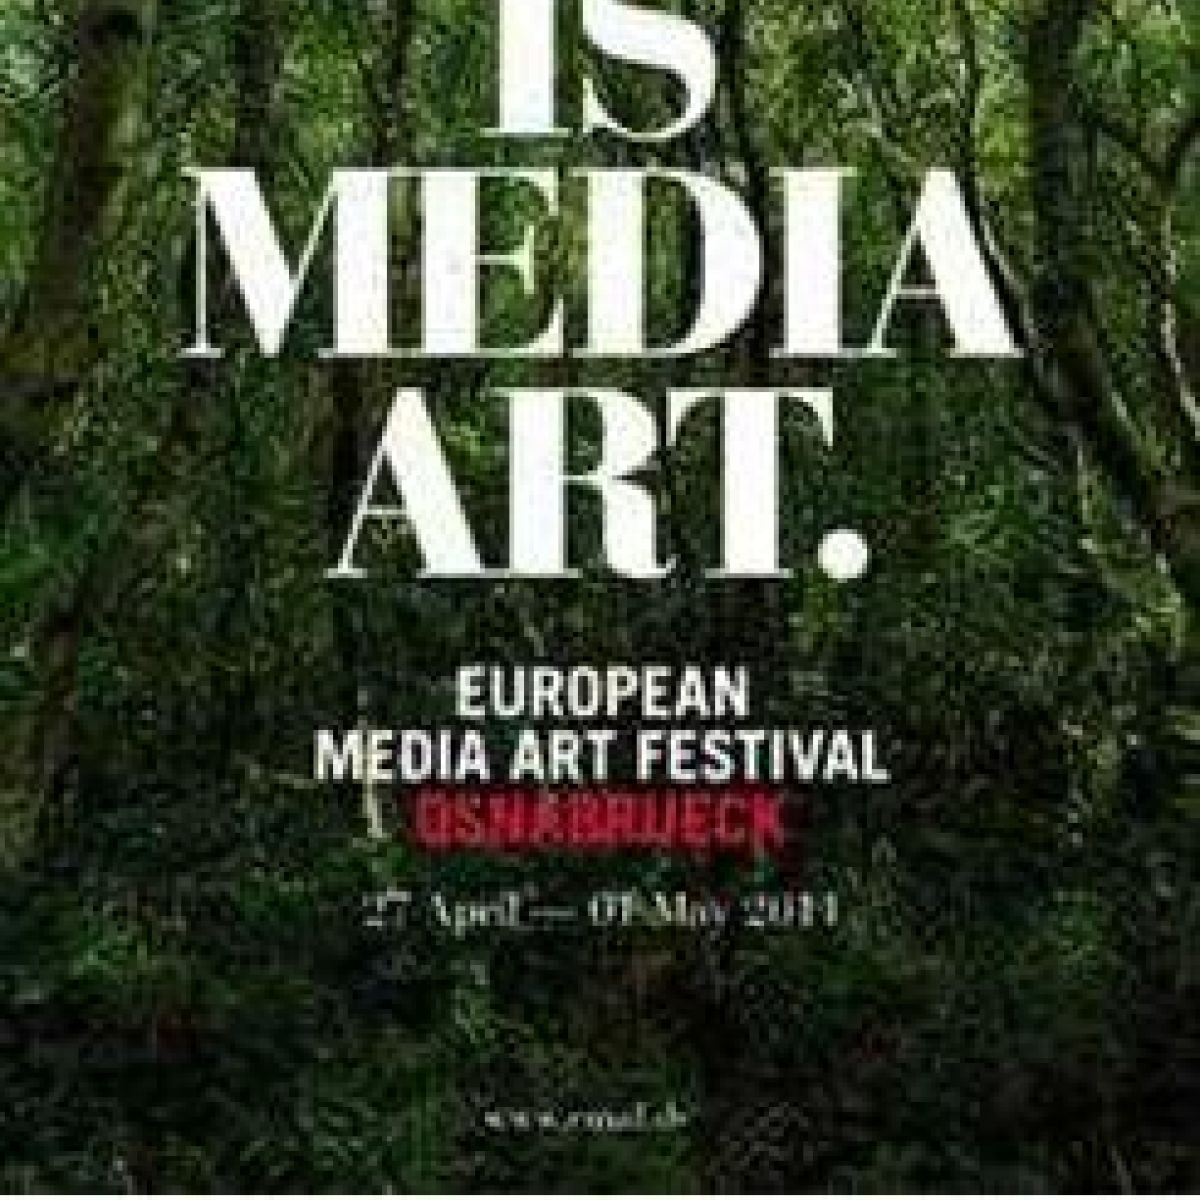 European media Art Festival Osnabrueck